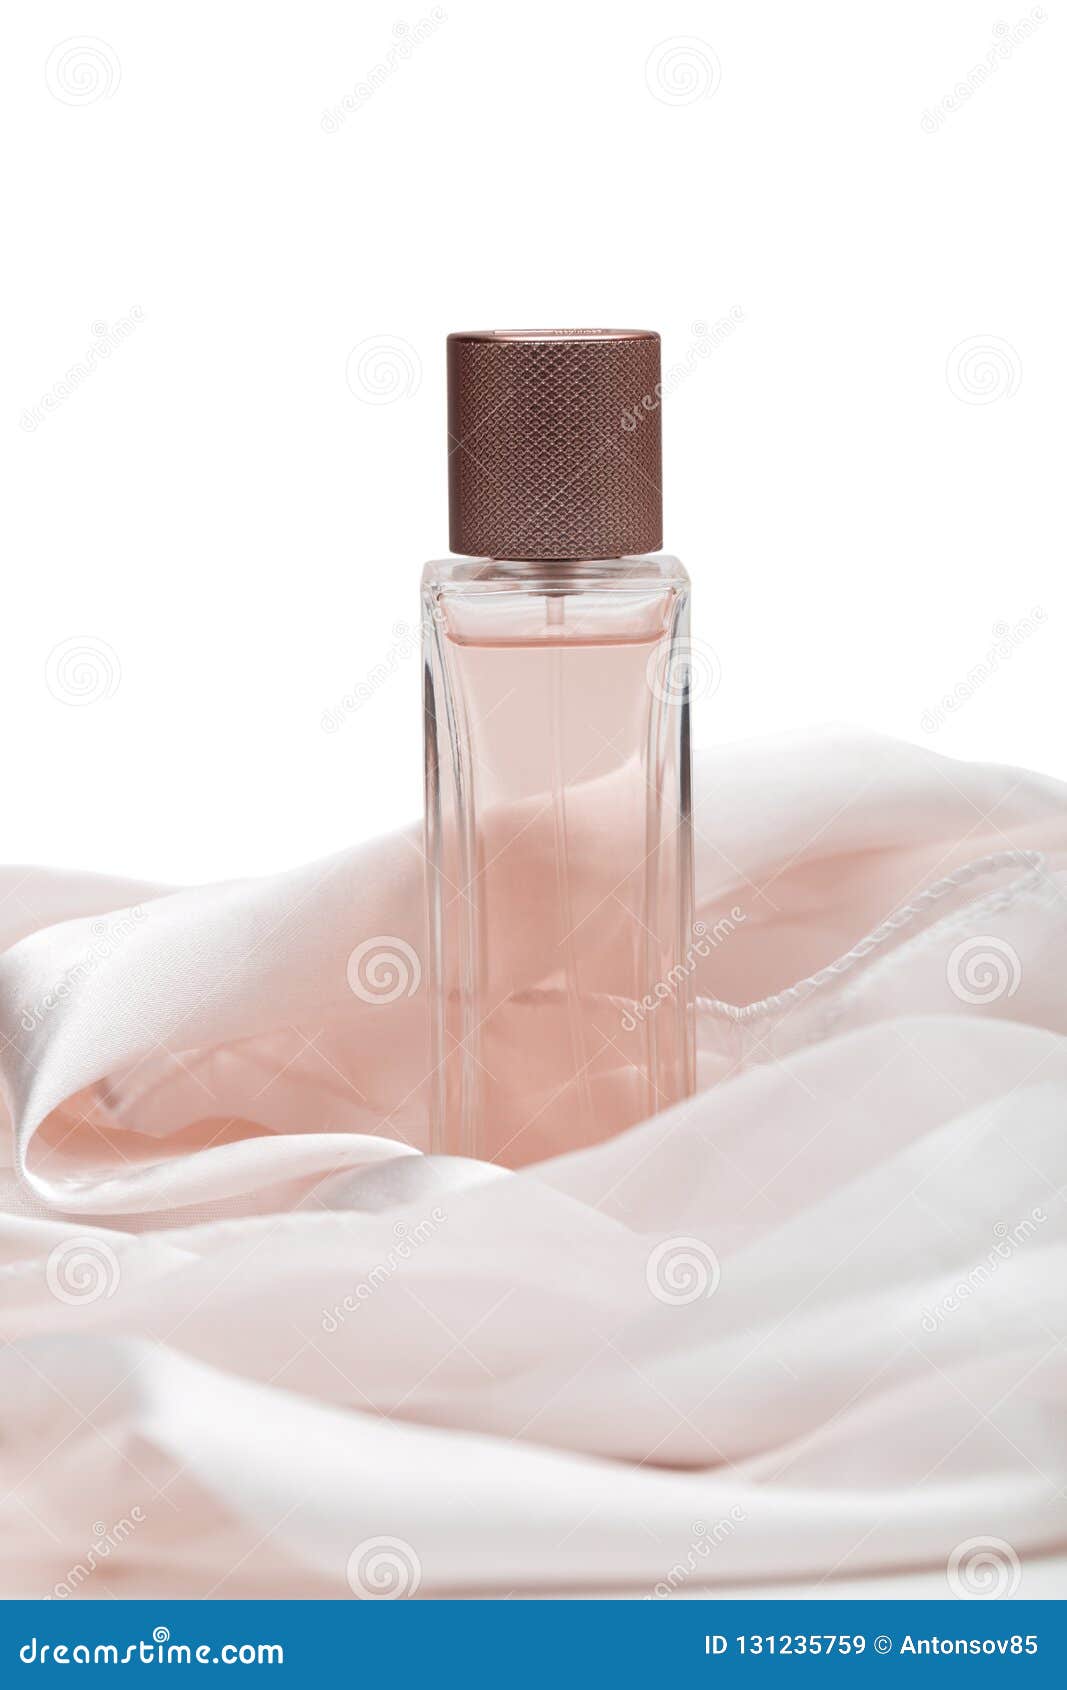 Perfume on the White Background Stock Image - Image of liquid, isolated ...